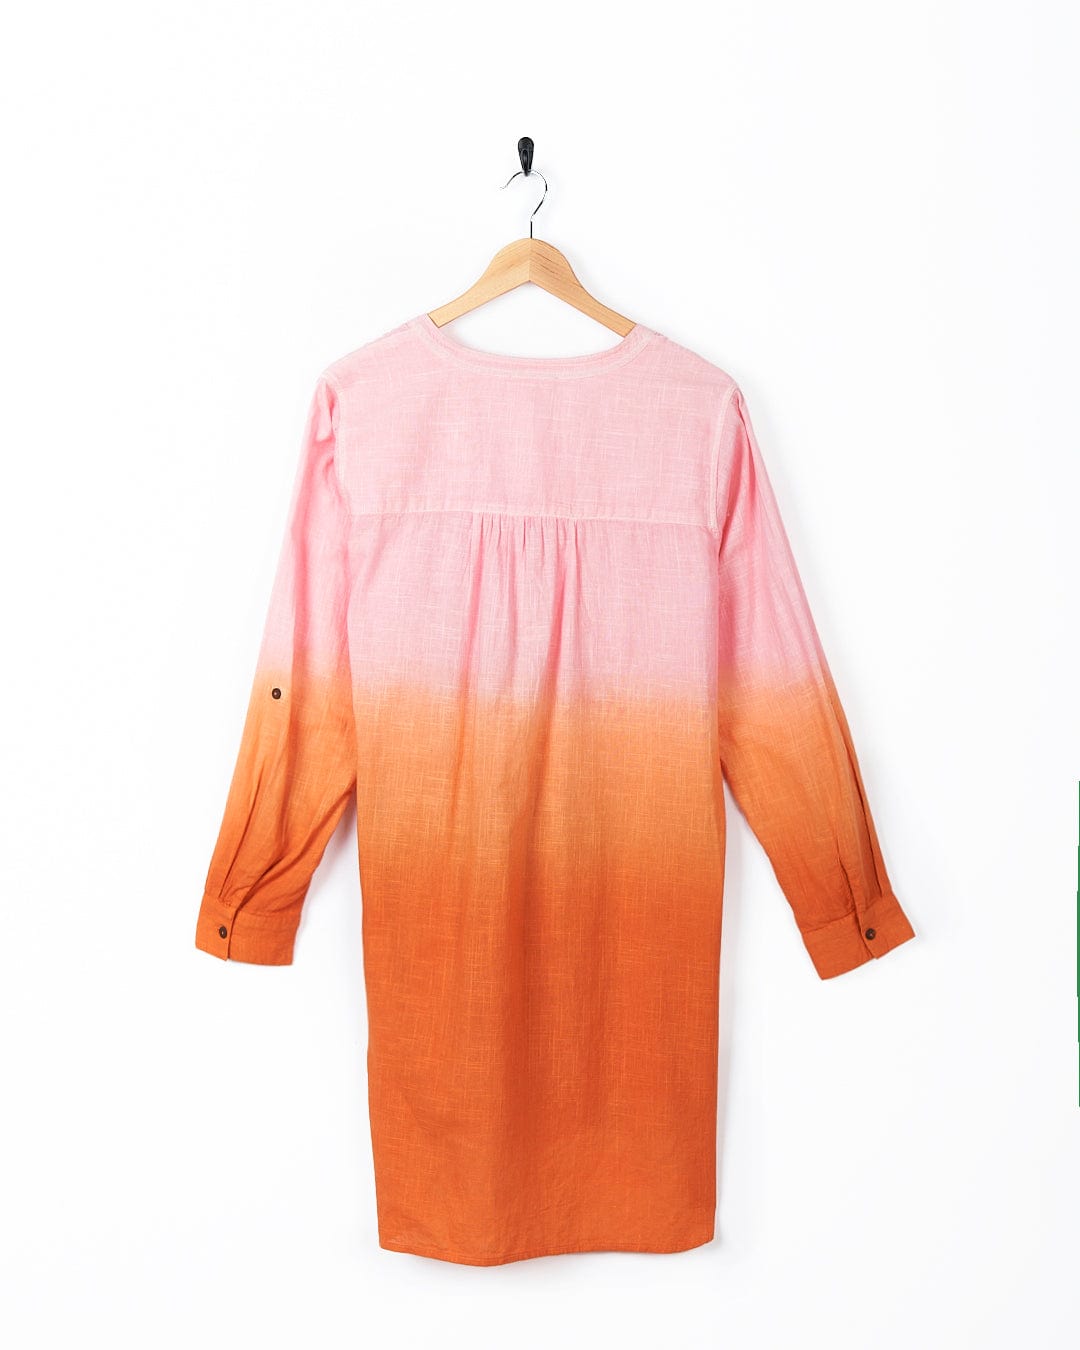 A Saltrock Manina - Womens Dip Die Beach Shirt - Orange and pink ombre dress hanging on a hanger.